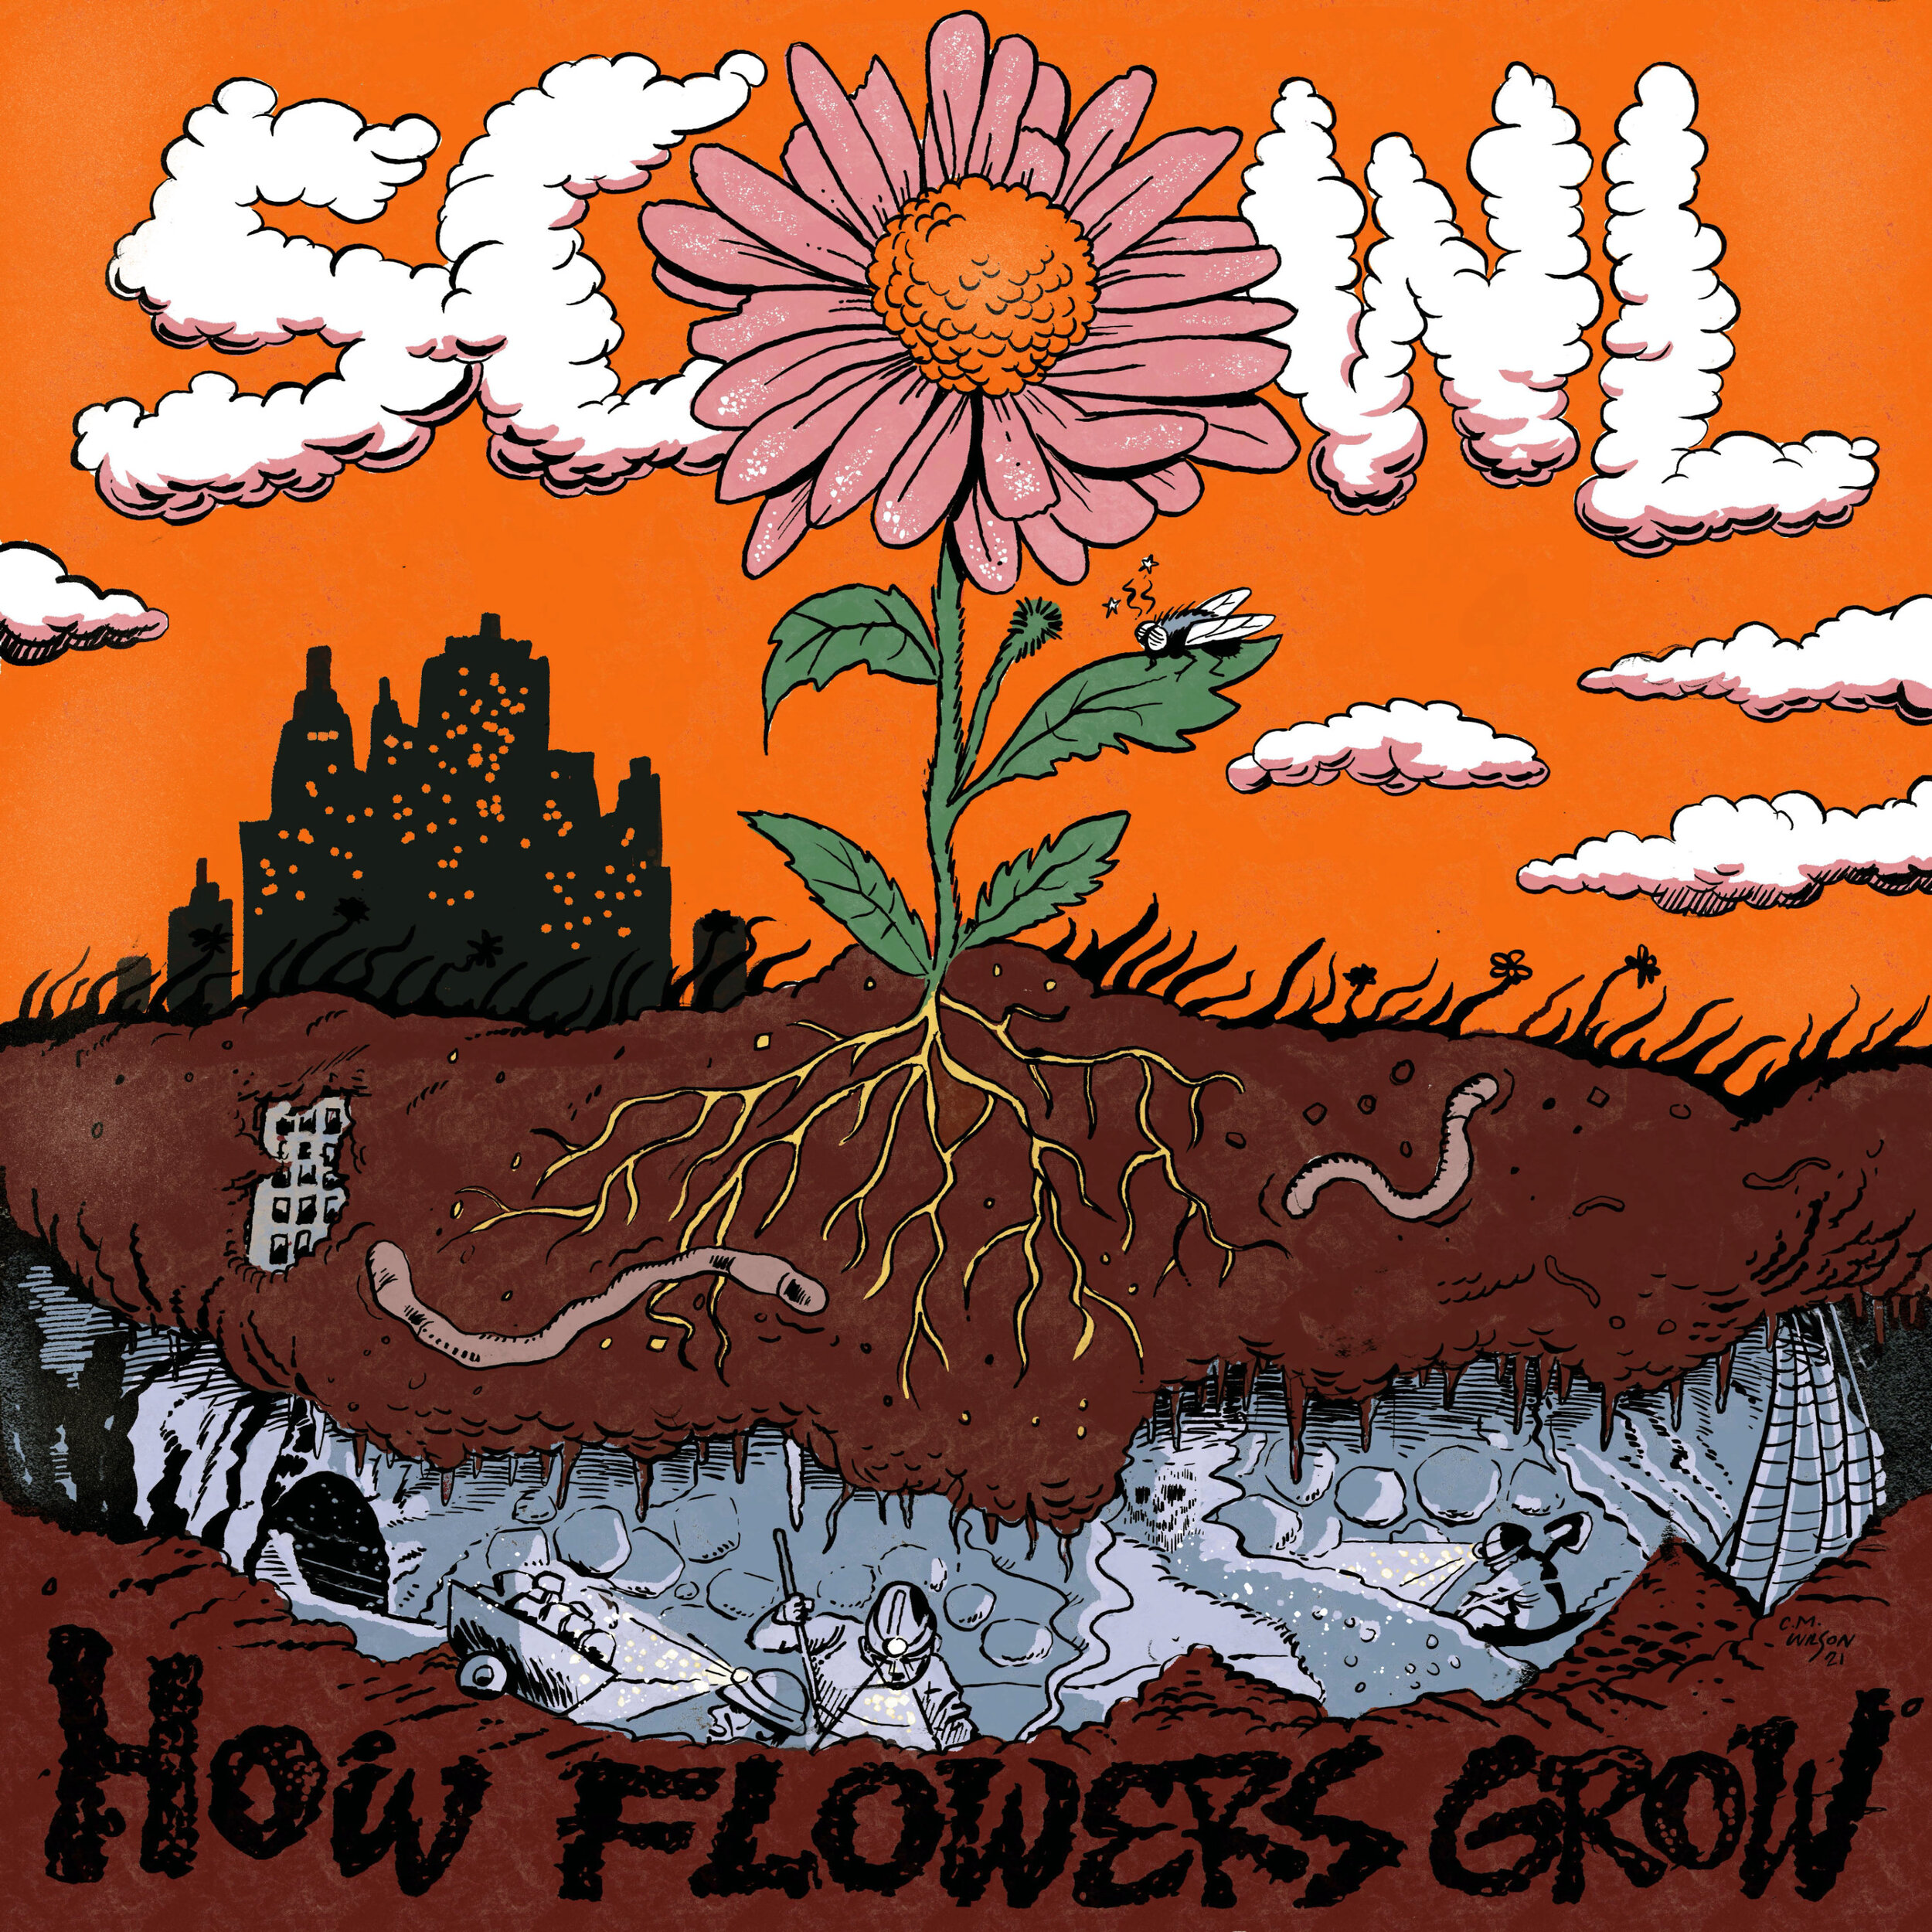 Scowl_how_flowers_grow_final.jpg